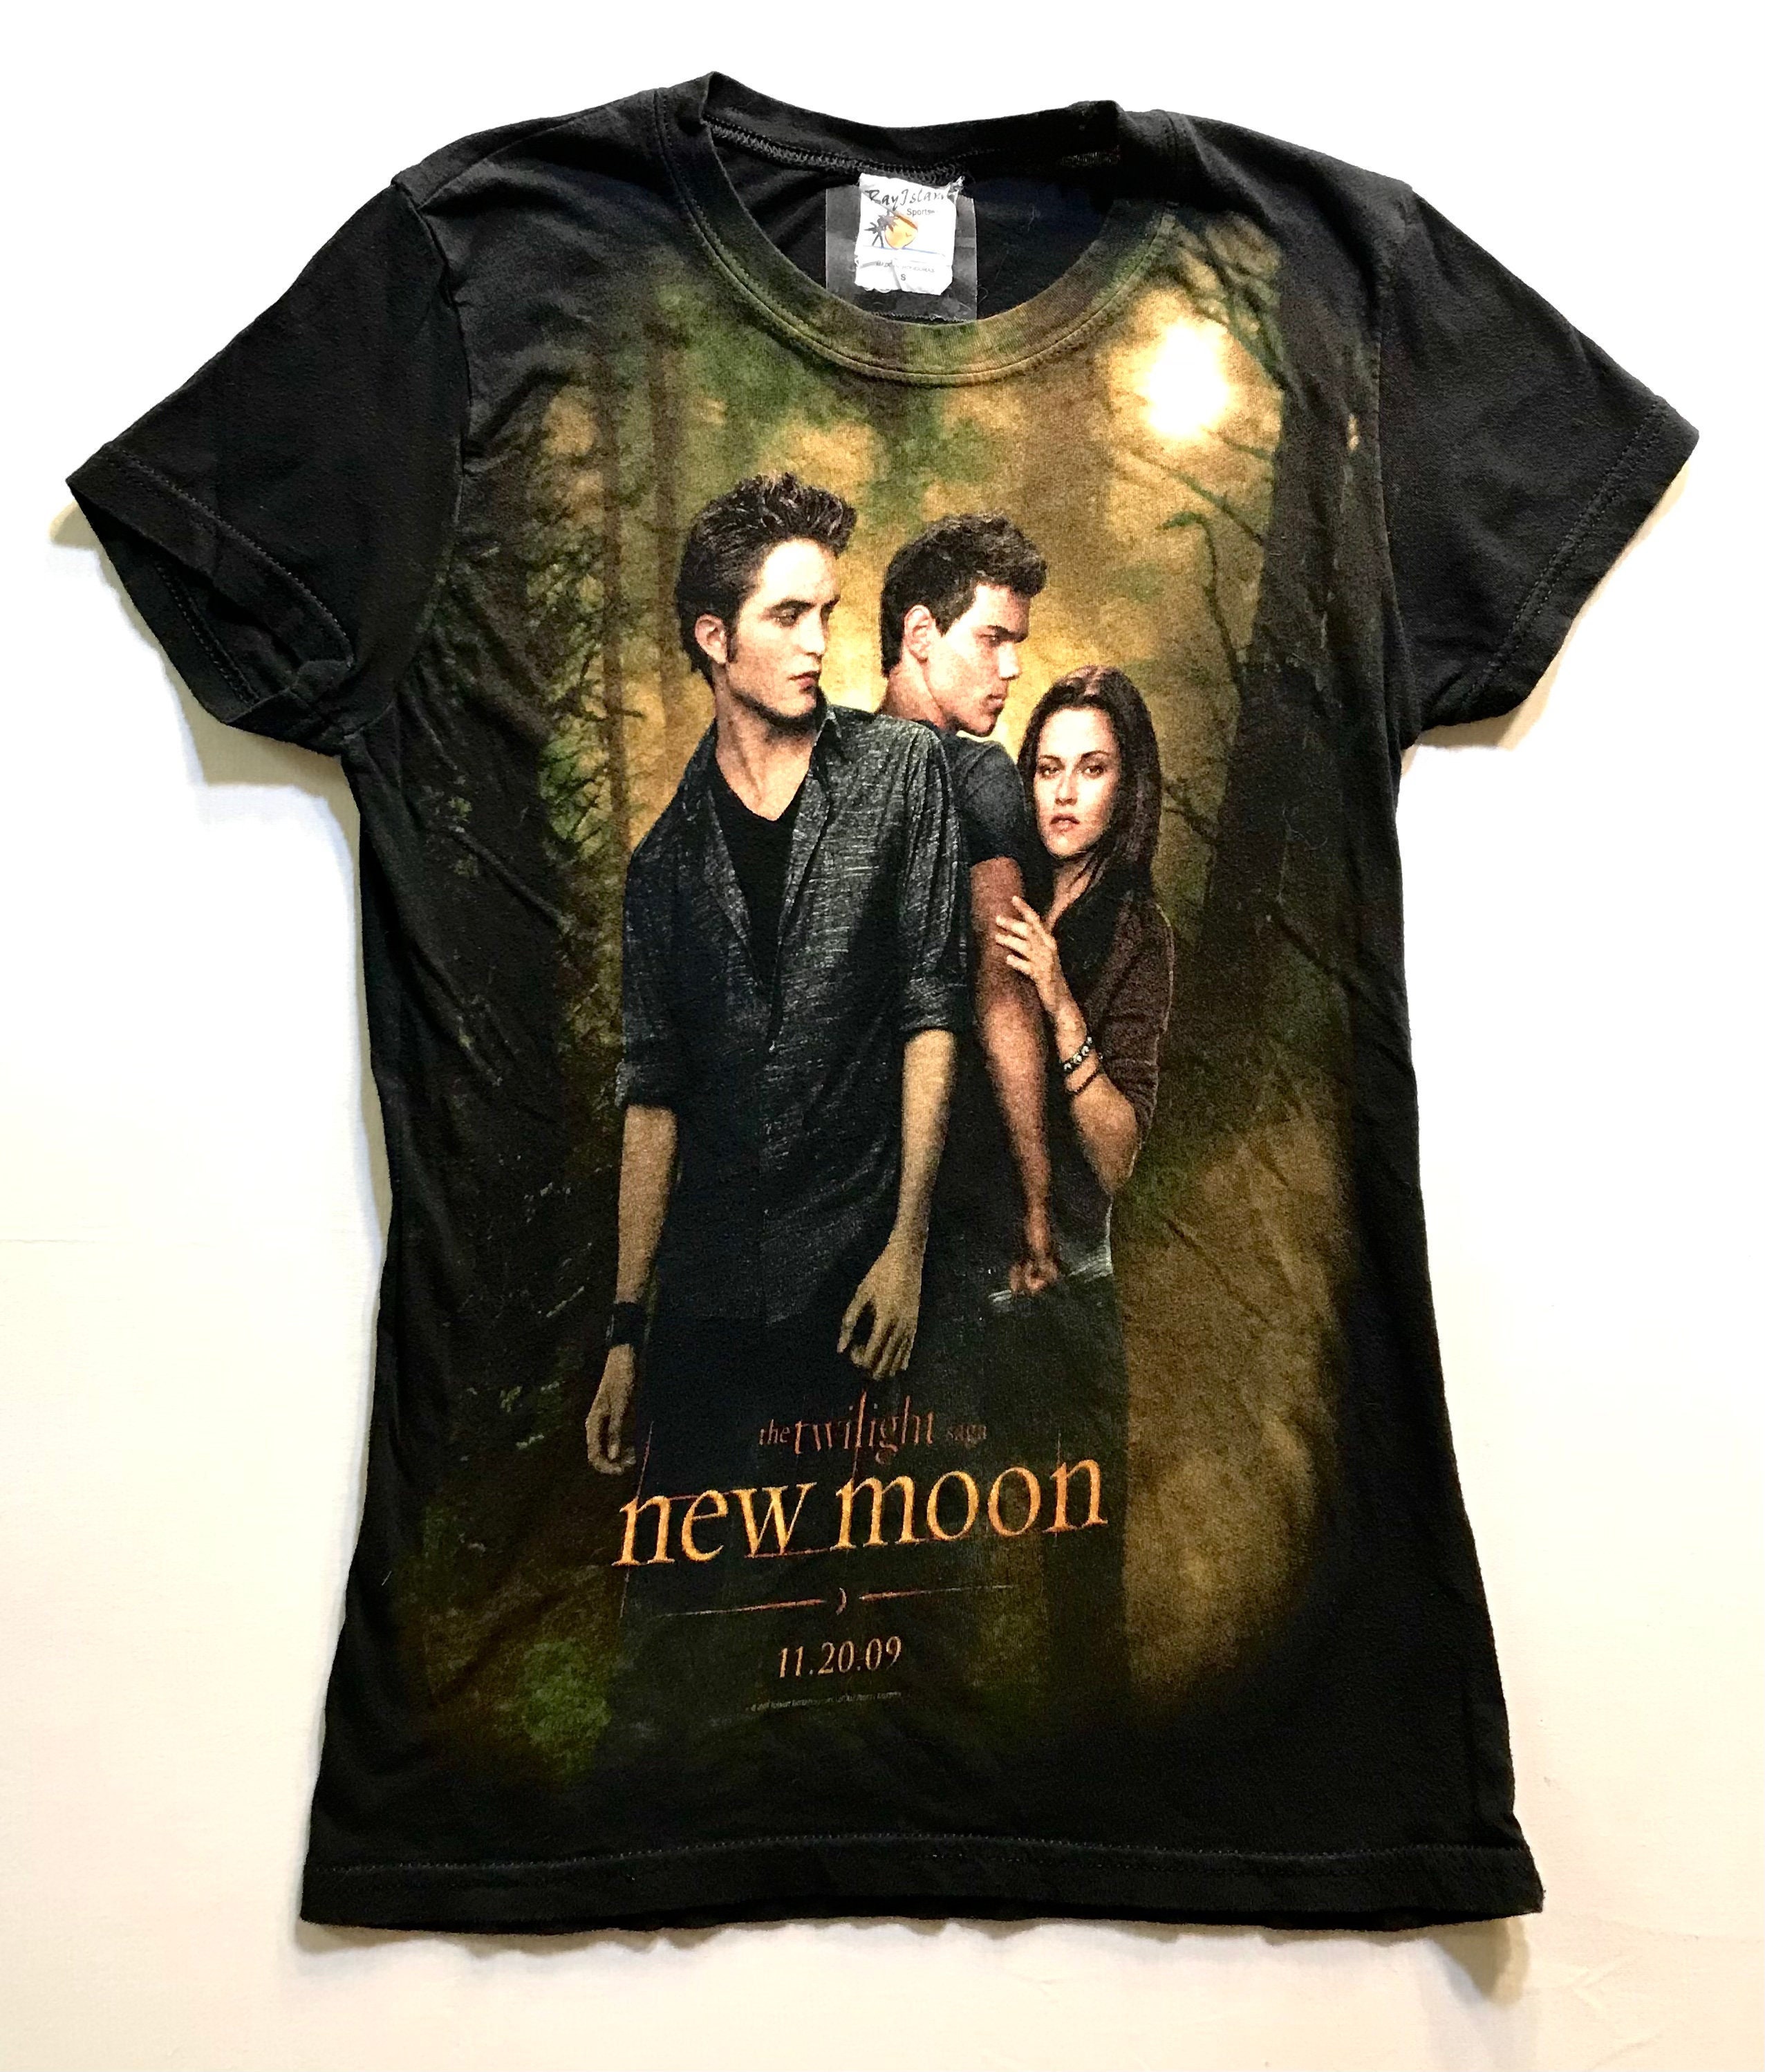 Vintage Twilight New Moon 2009 movie t shirt women’s size Small